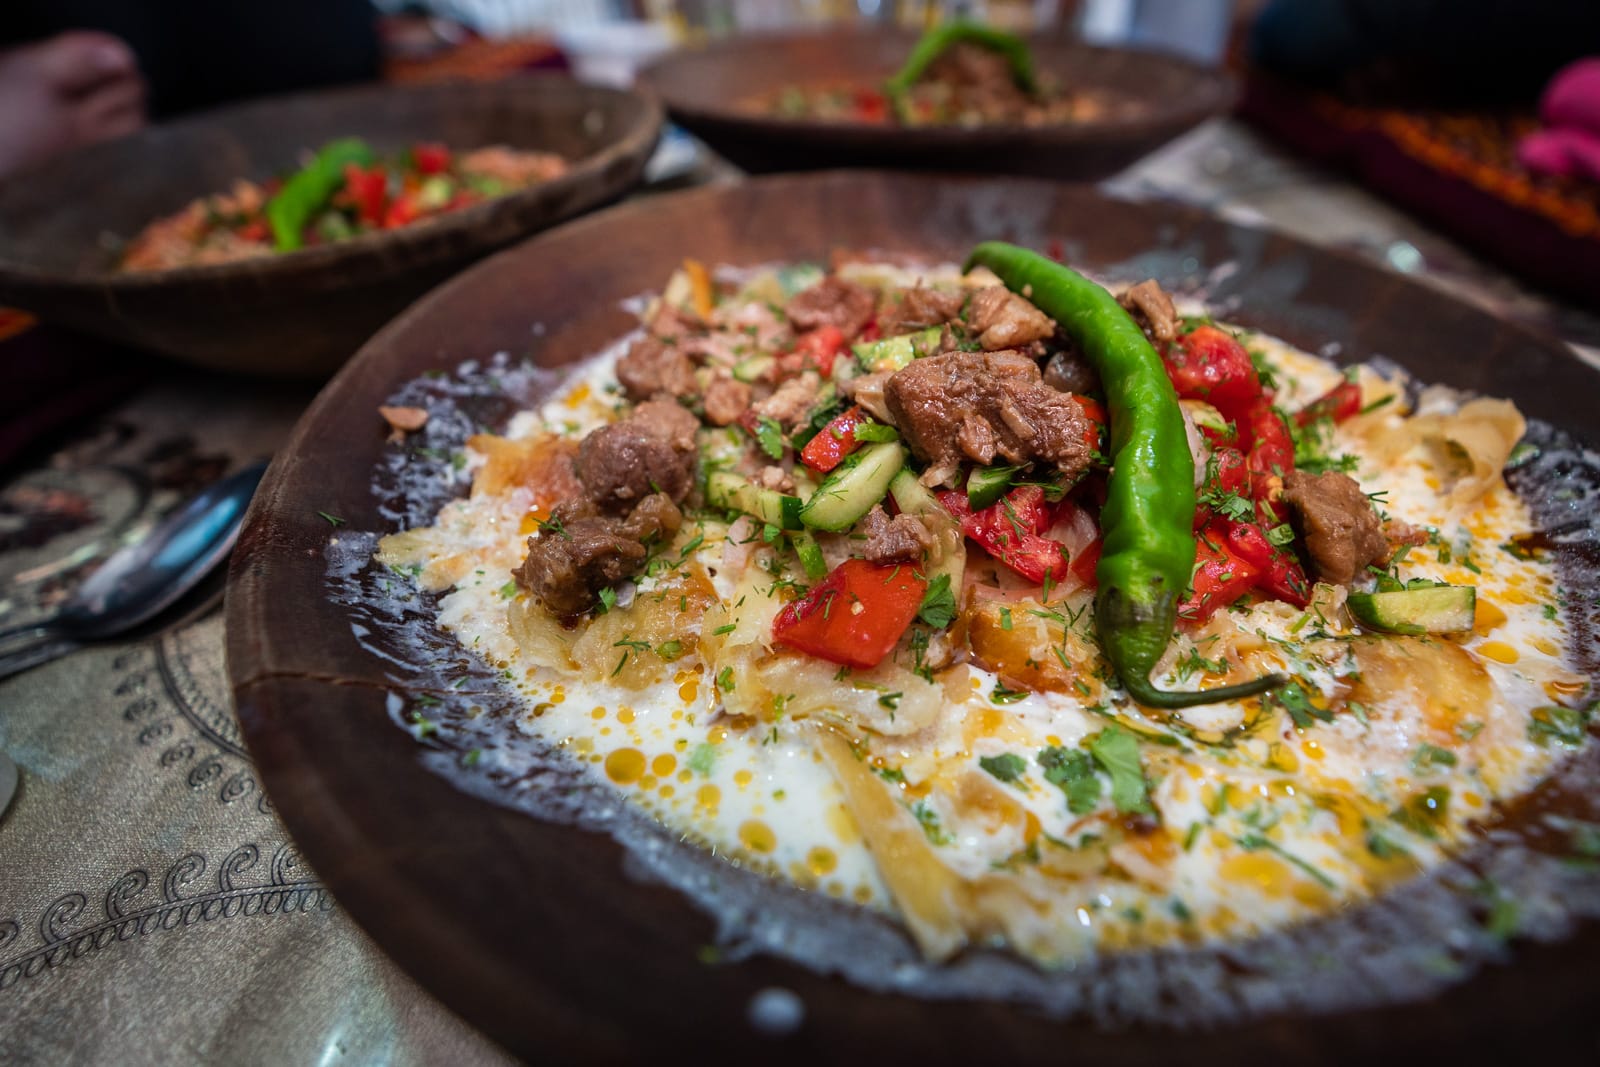 Kurutob with meat at Olim Kurutobhona in Dushanbe, Tajikistan